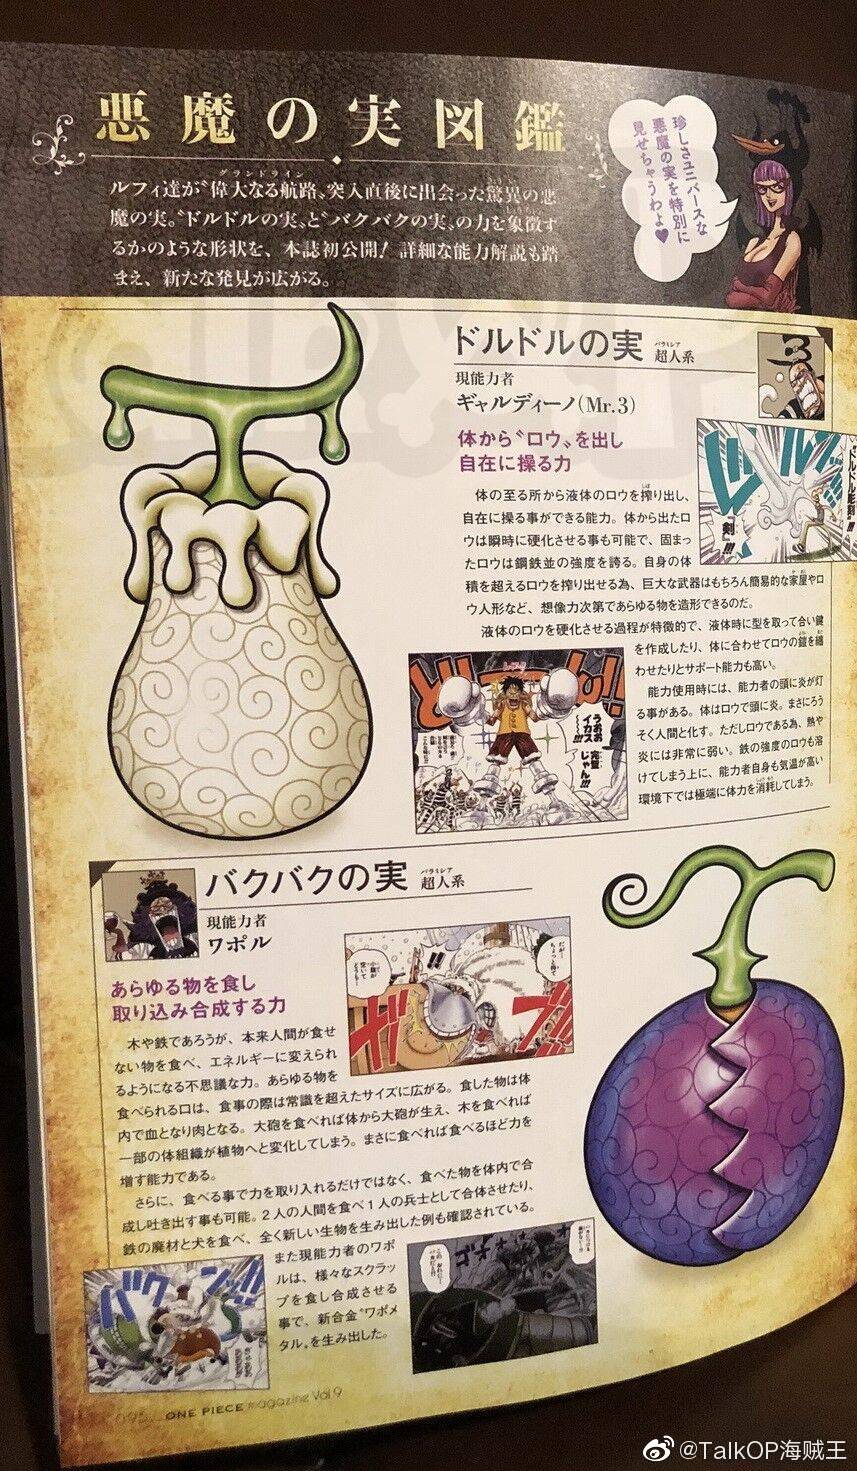 One Piece Magazine 9 E9-c5410